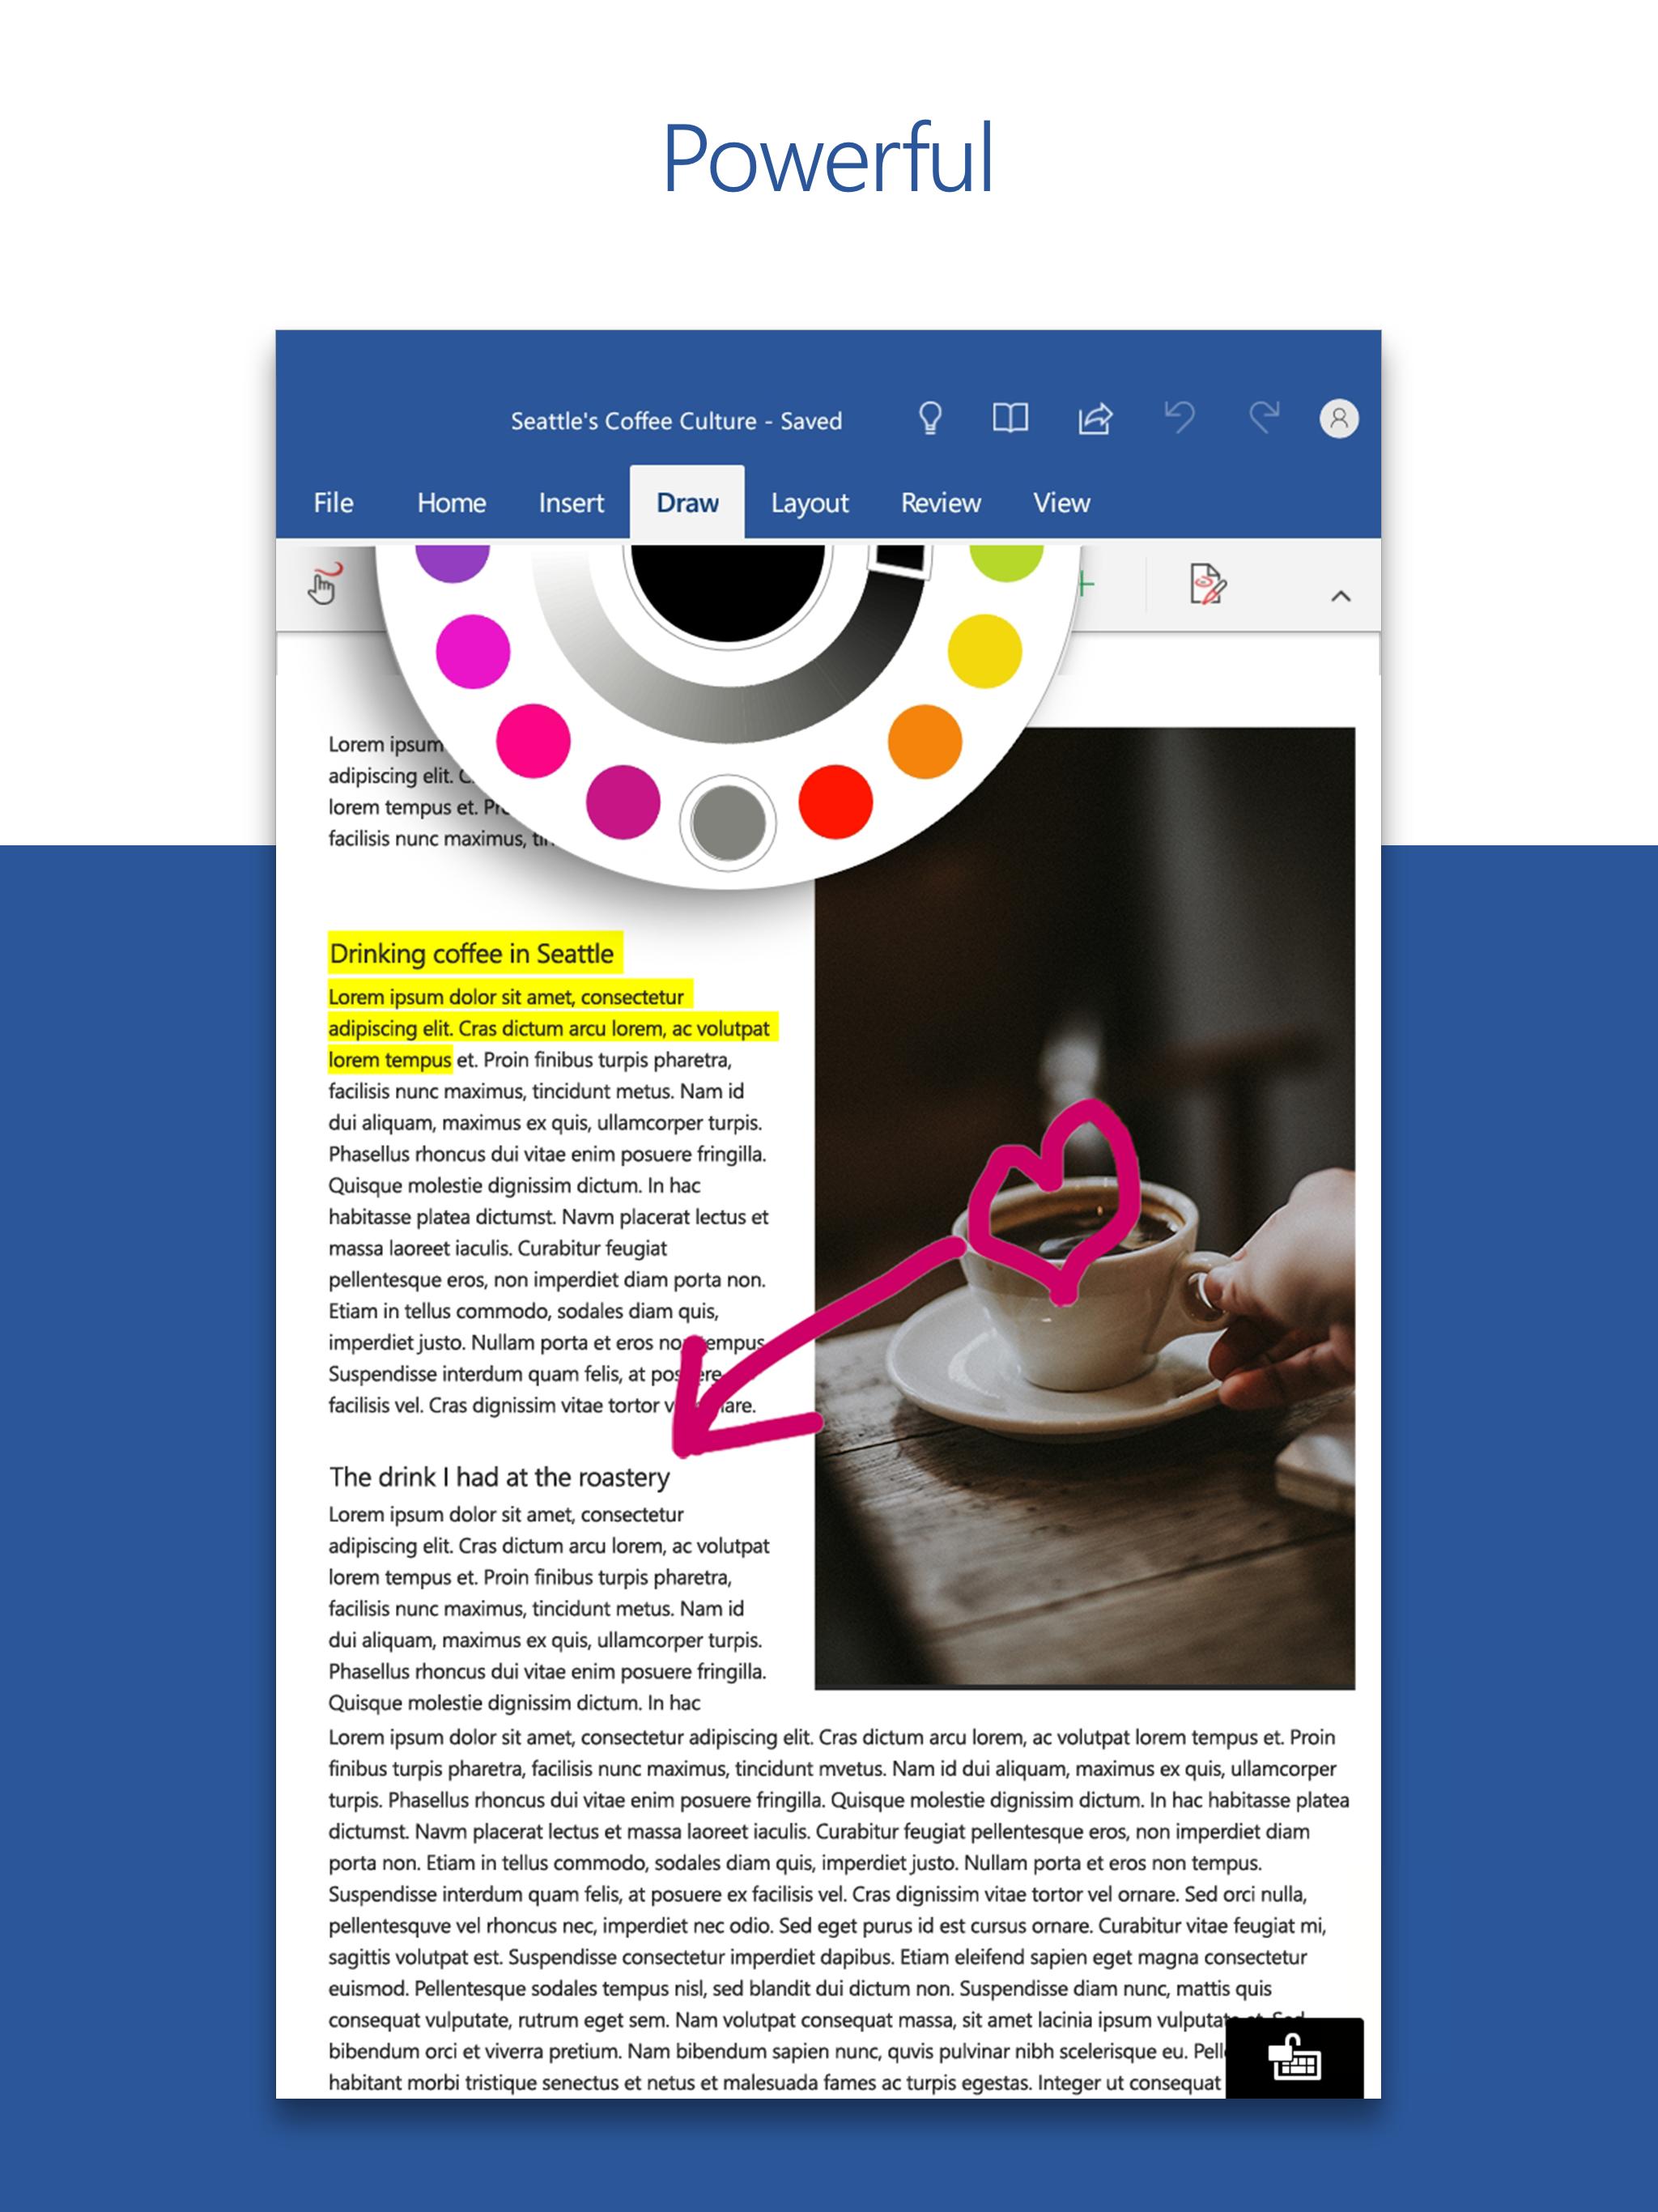 Microsoft Word: Write, Edit & Share Docs on the Go 16.0.13426.20196 Screenshot 7